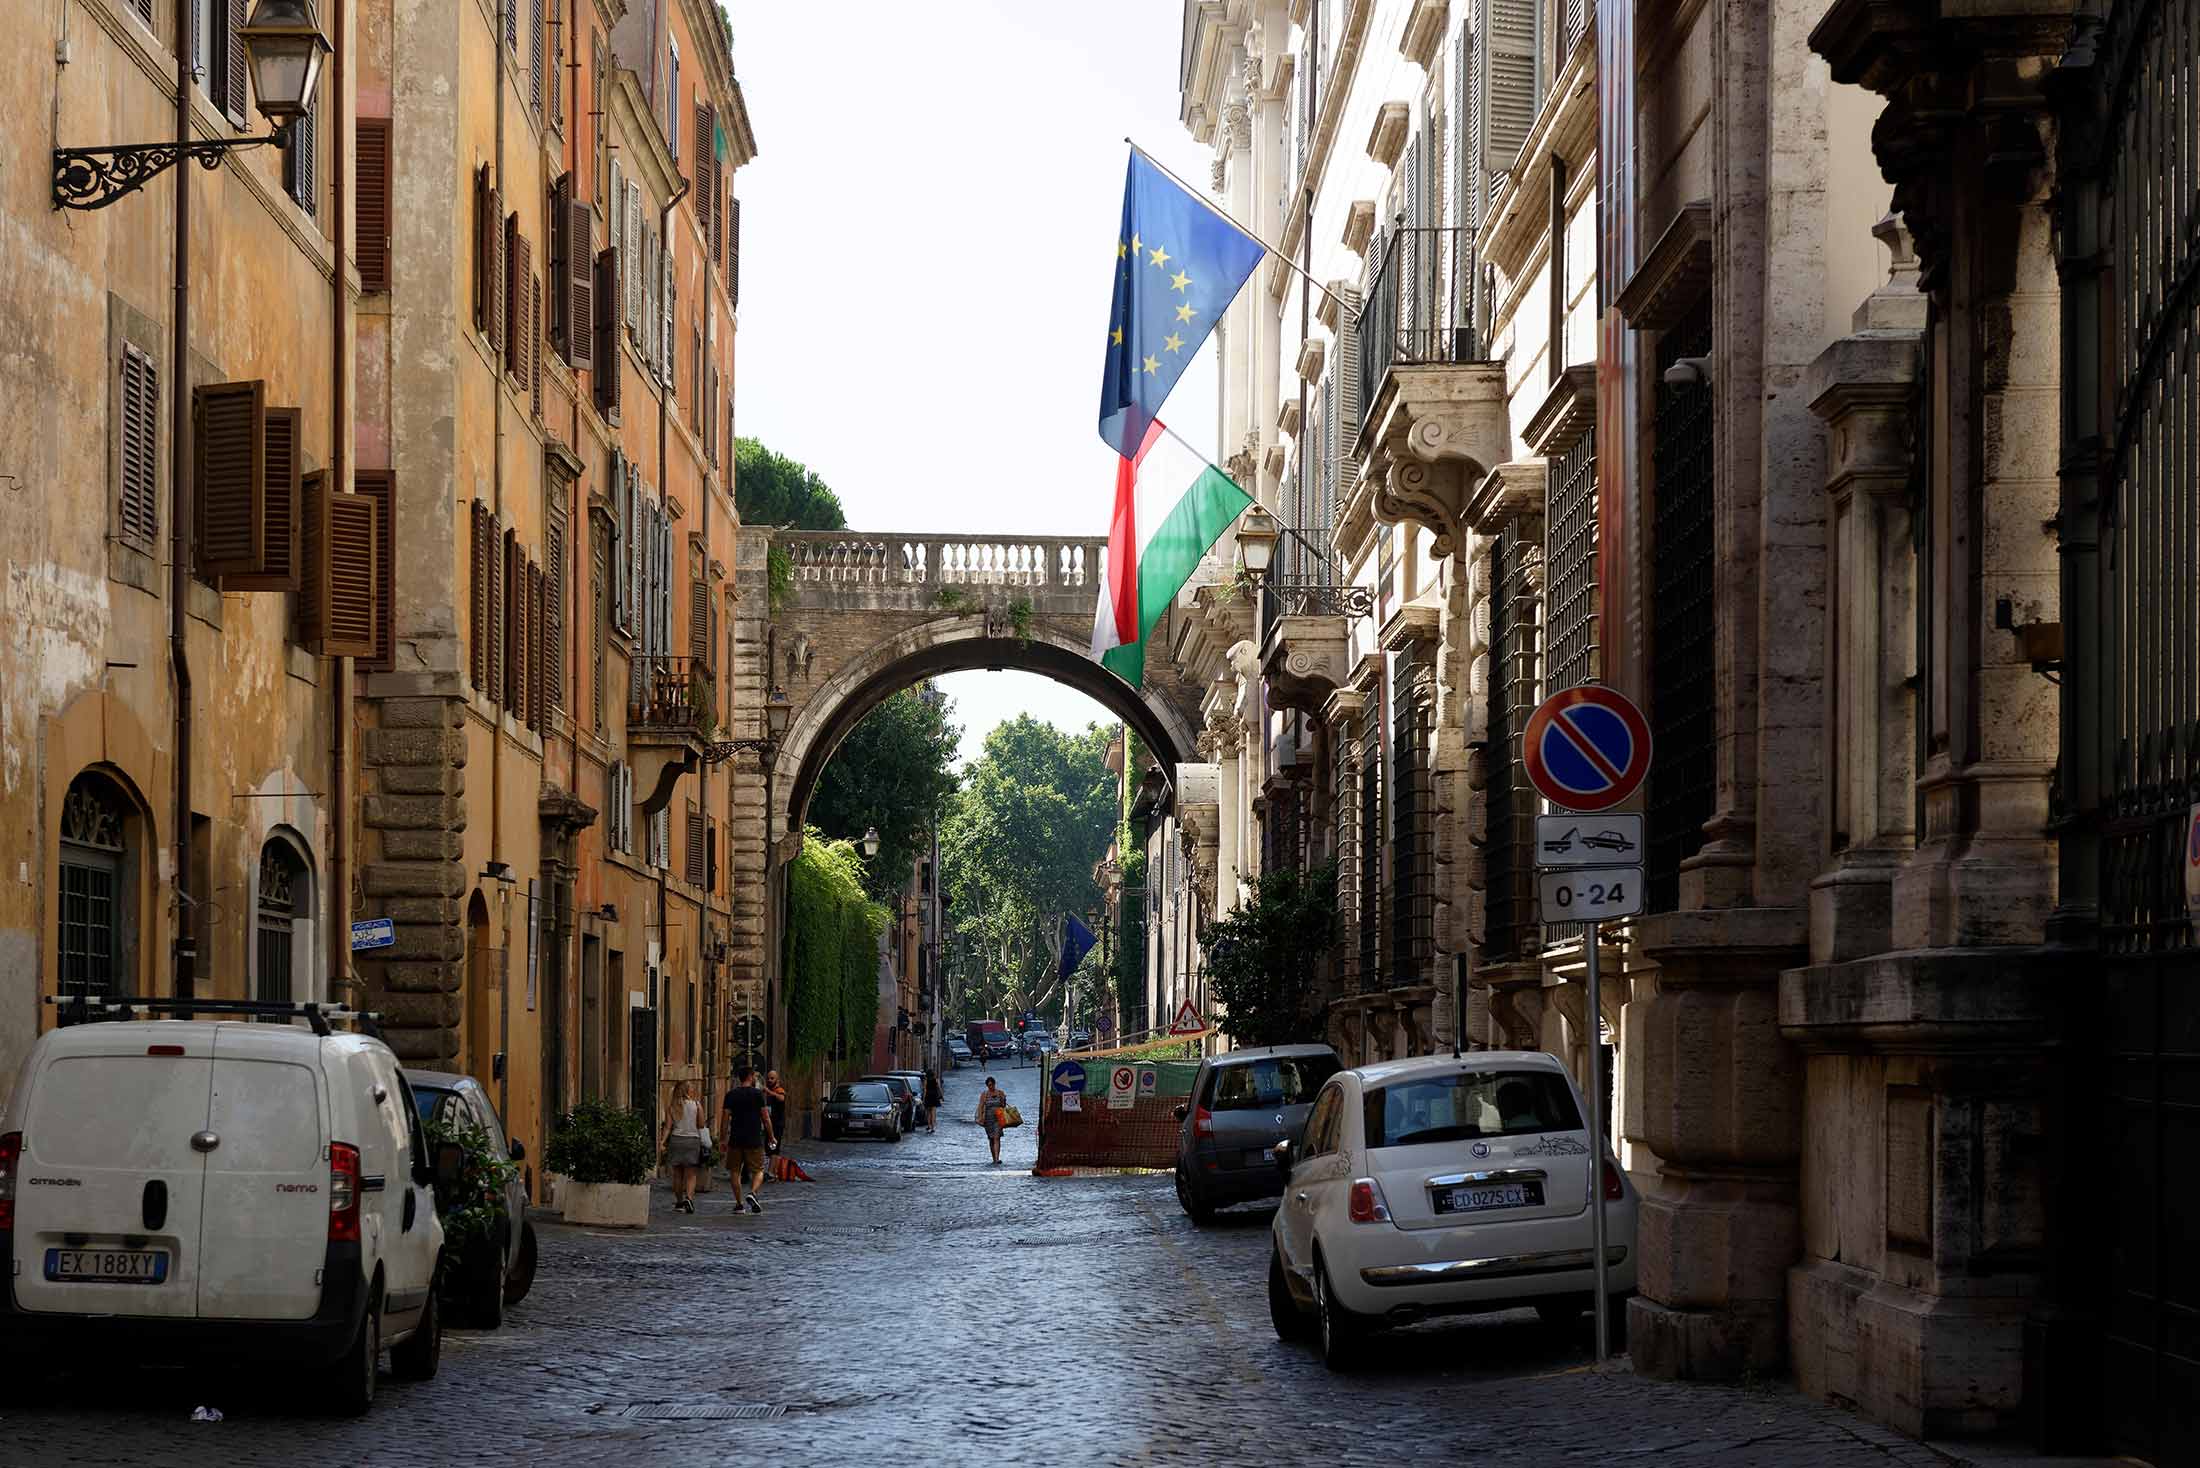 New Bond Street rents no longer Europe's highest as Milan tops the list